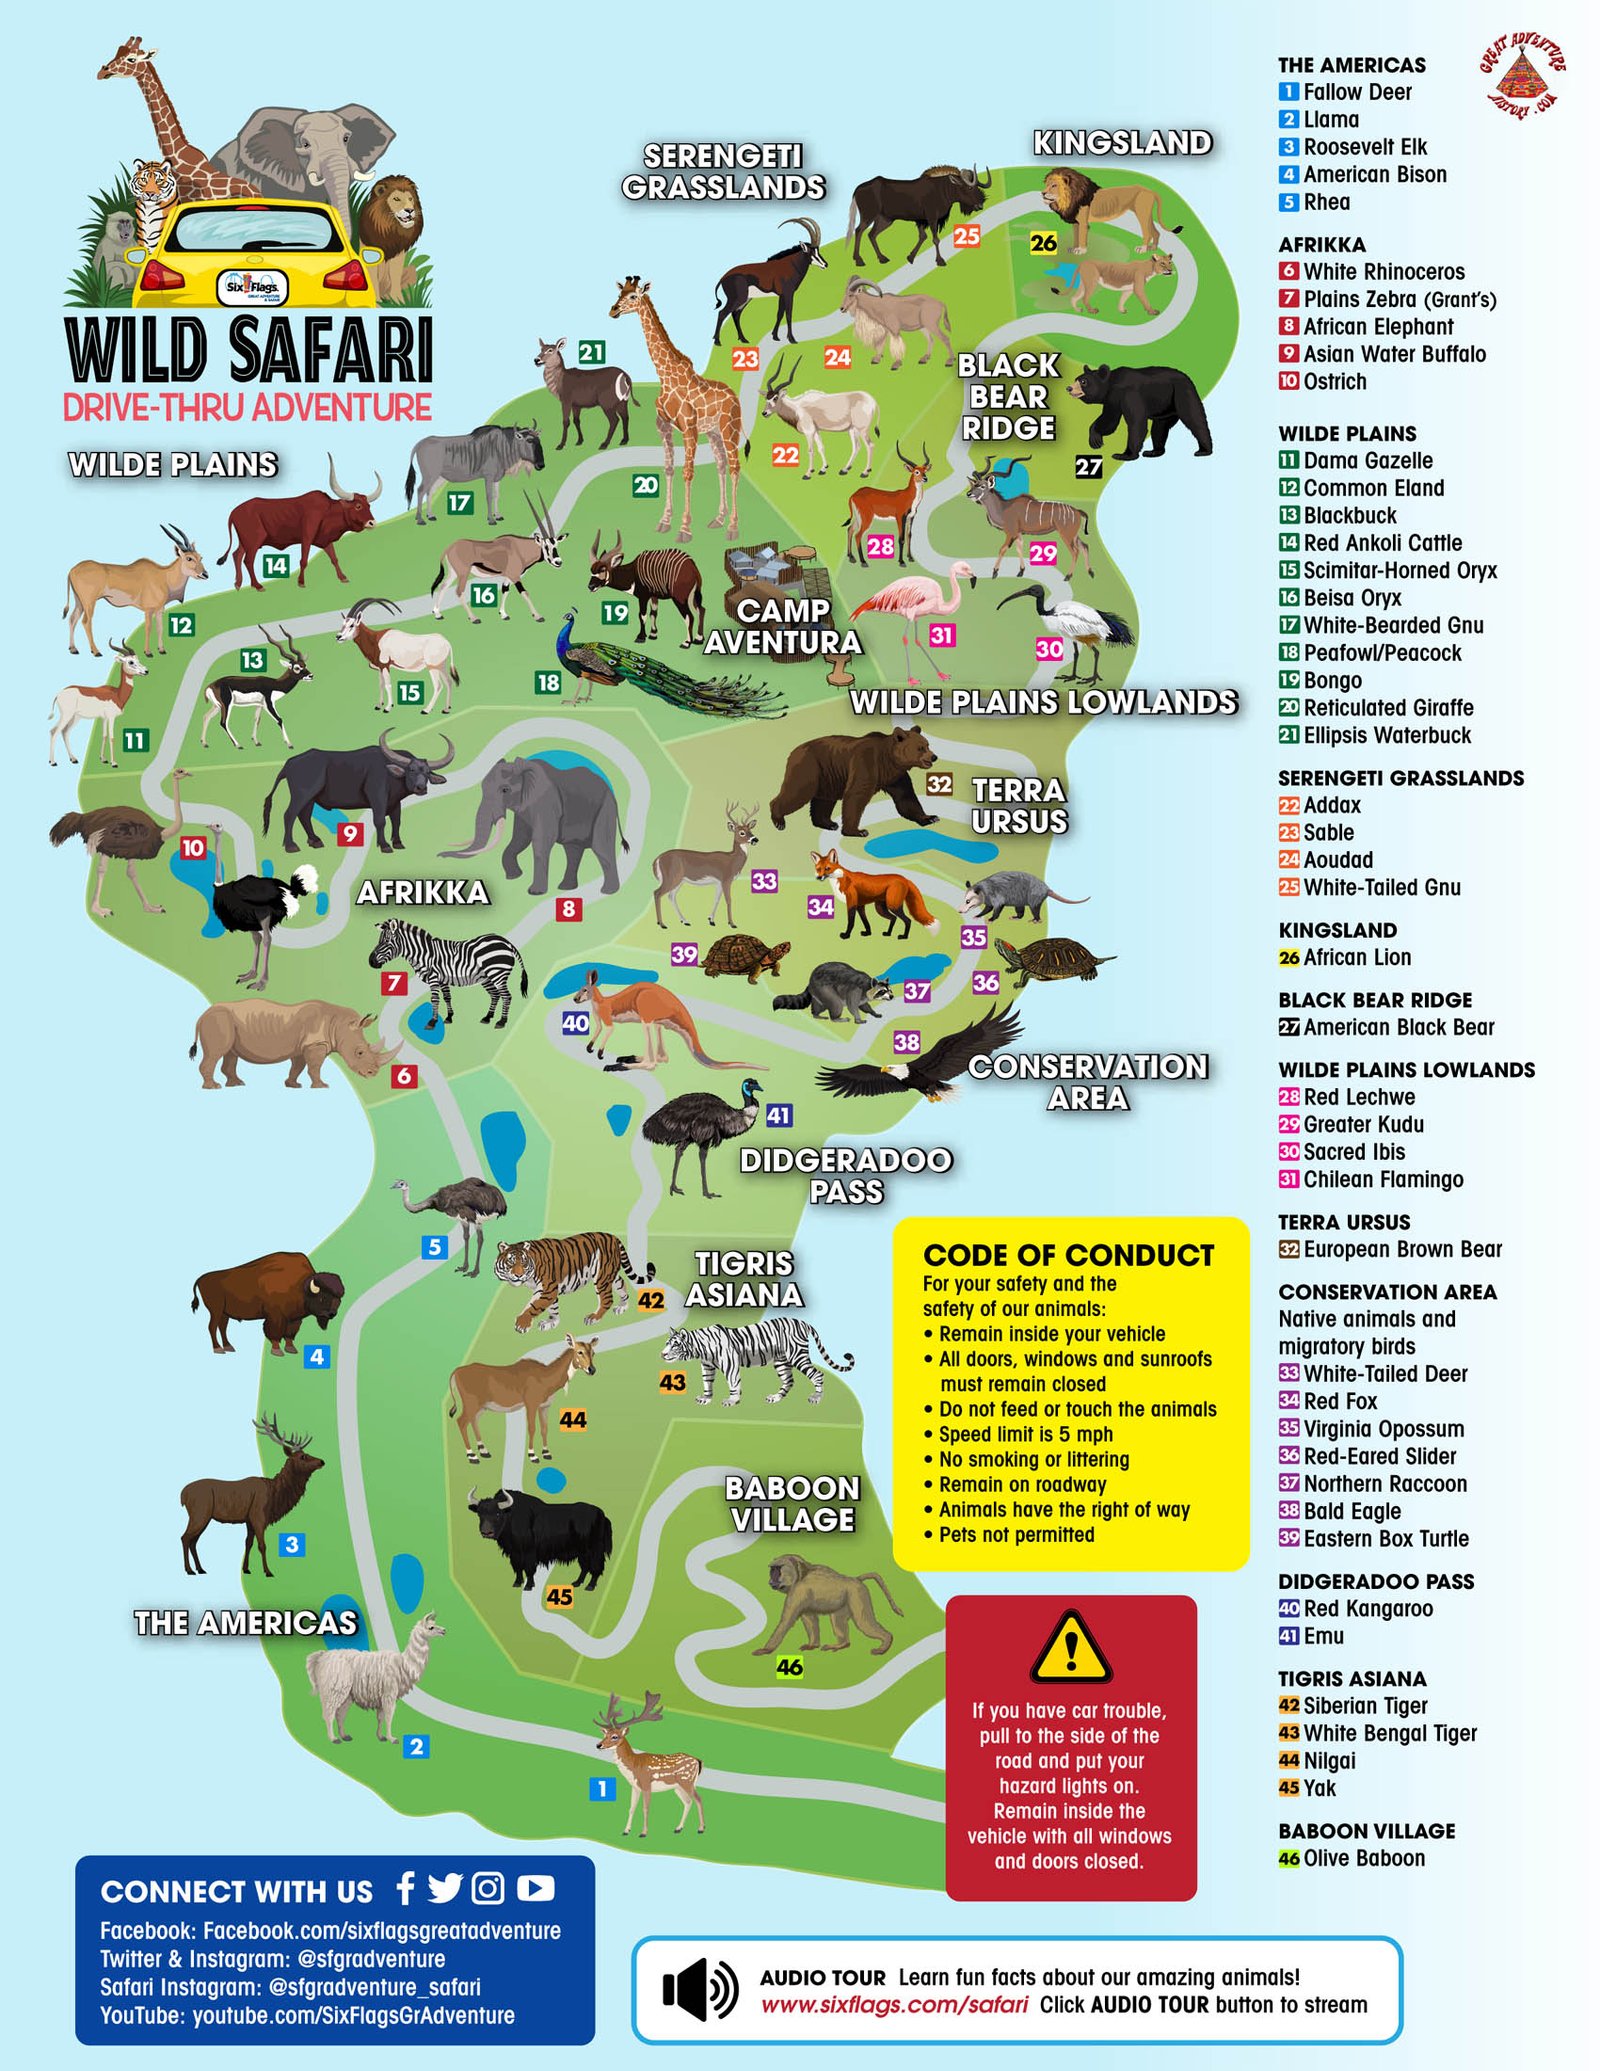 wild safari nj directions